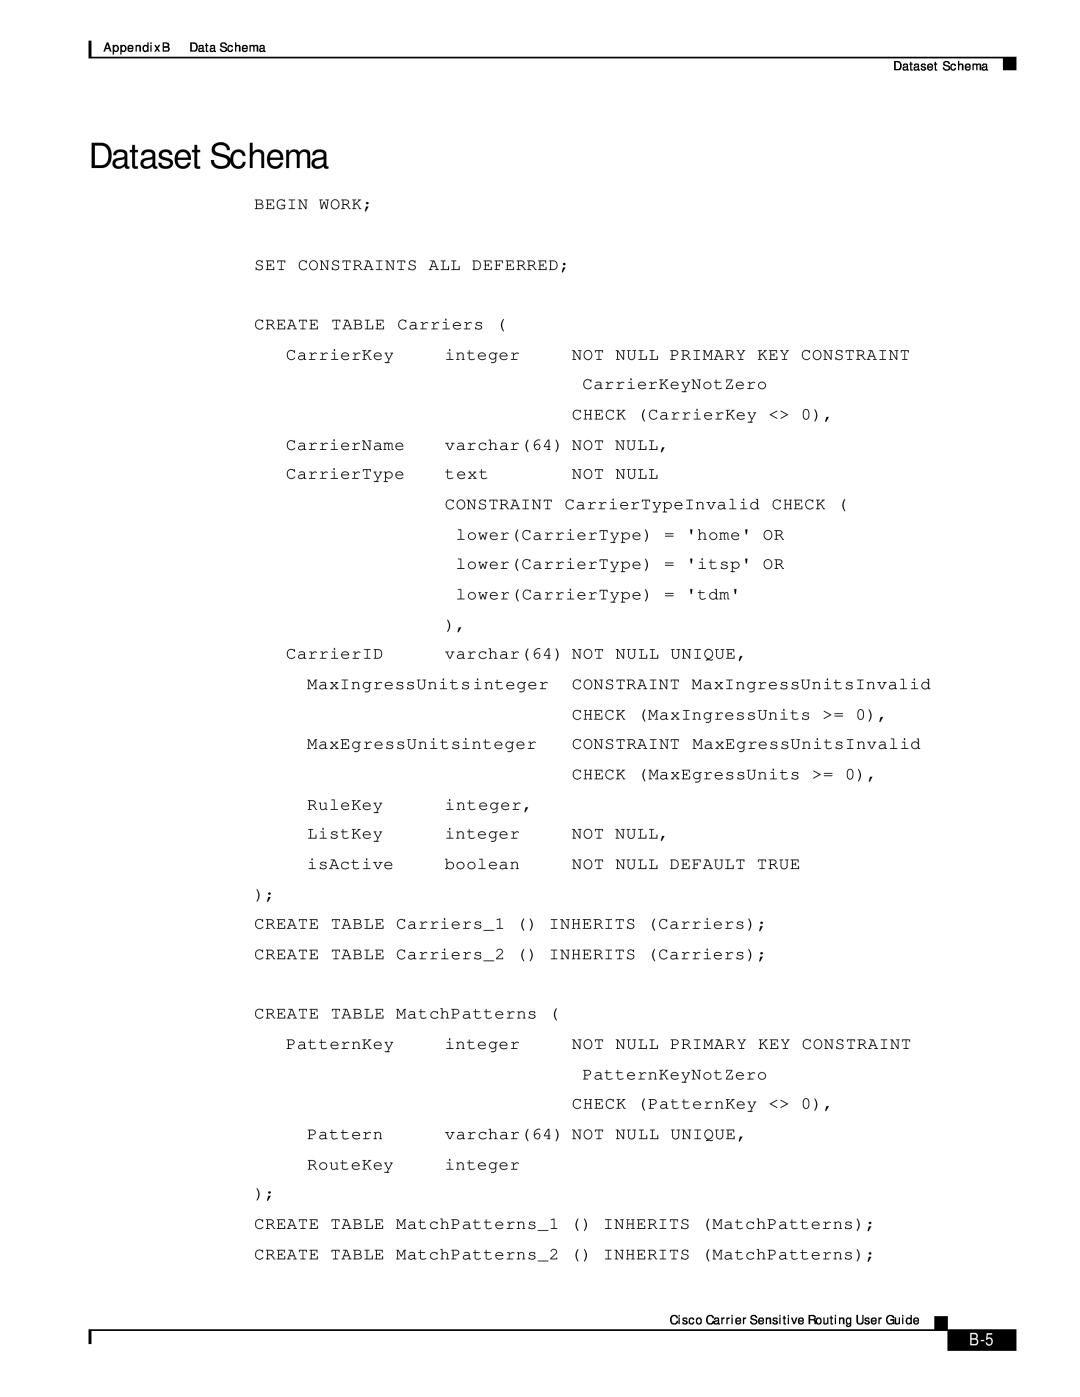 Cisco Systems Version 1.1 manual Dataset Schema 